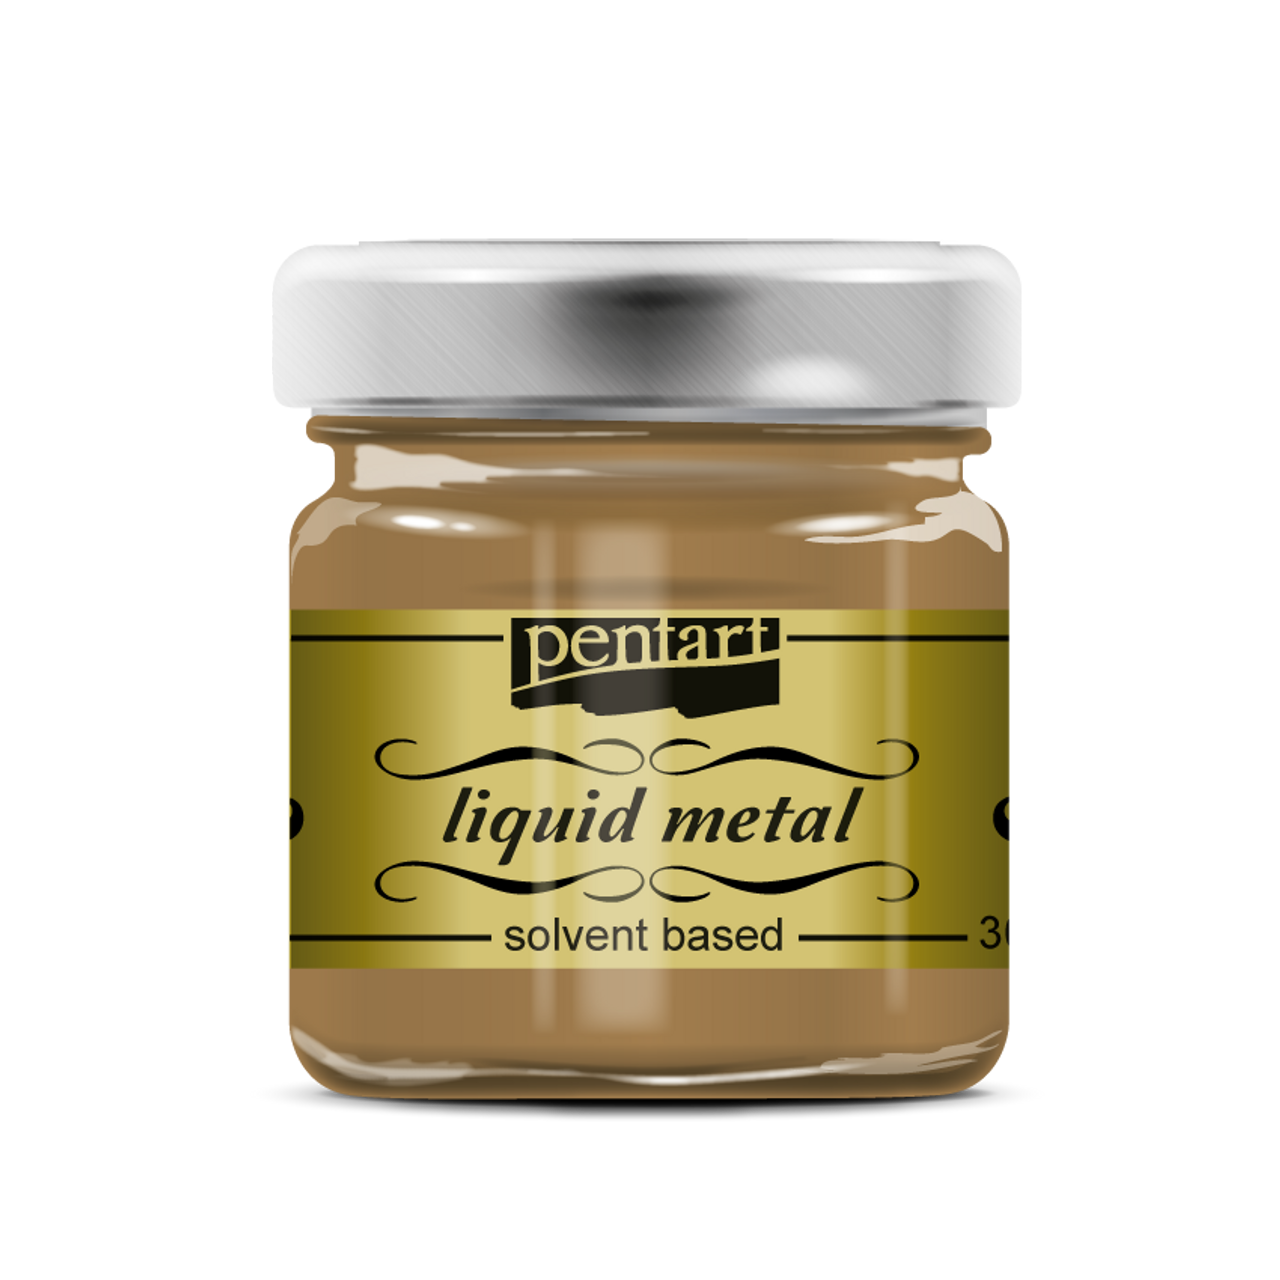 Pentart - Liquid Metal - Solvent Based - 30 ml / 1.01 ounces